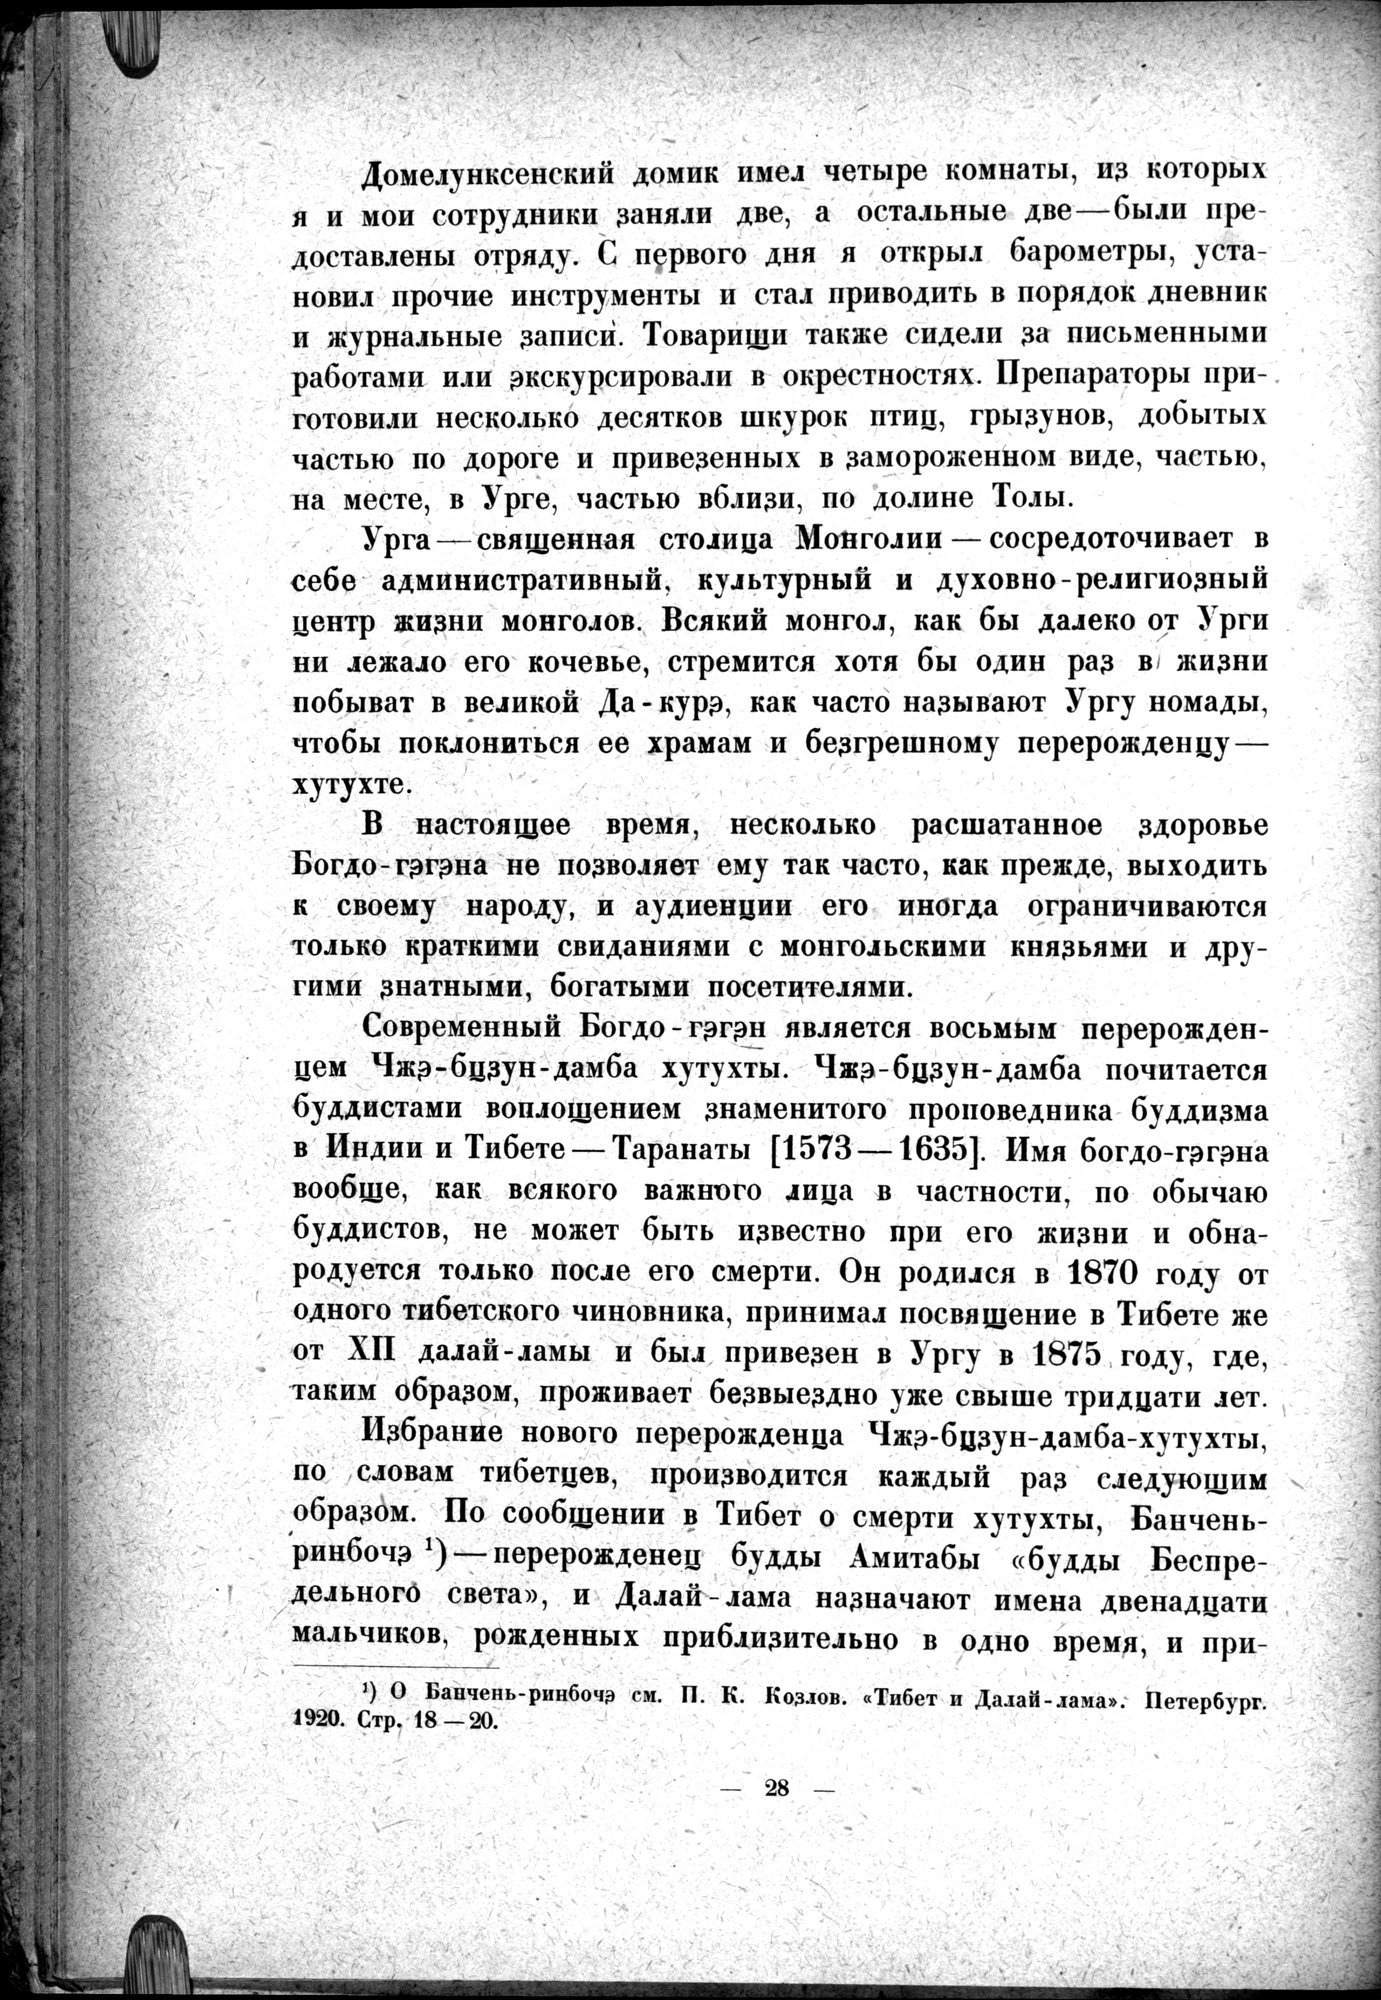 Mongoliya i Amdo i mertby gorod Khara-Khoto : vol.1 / Page 44 (Grayscale High Resolution Image)